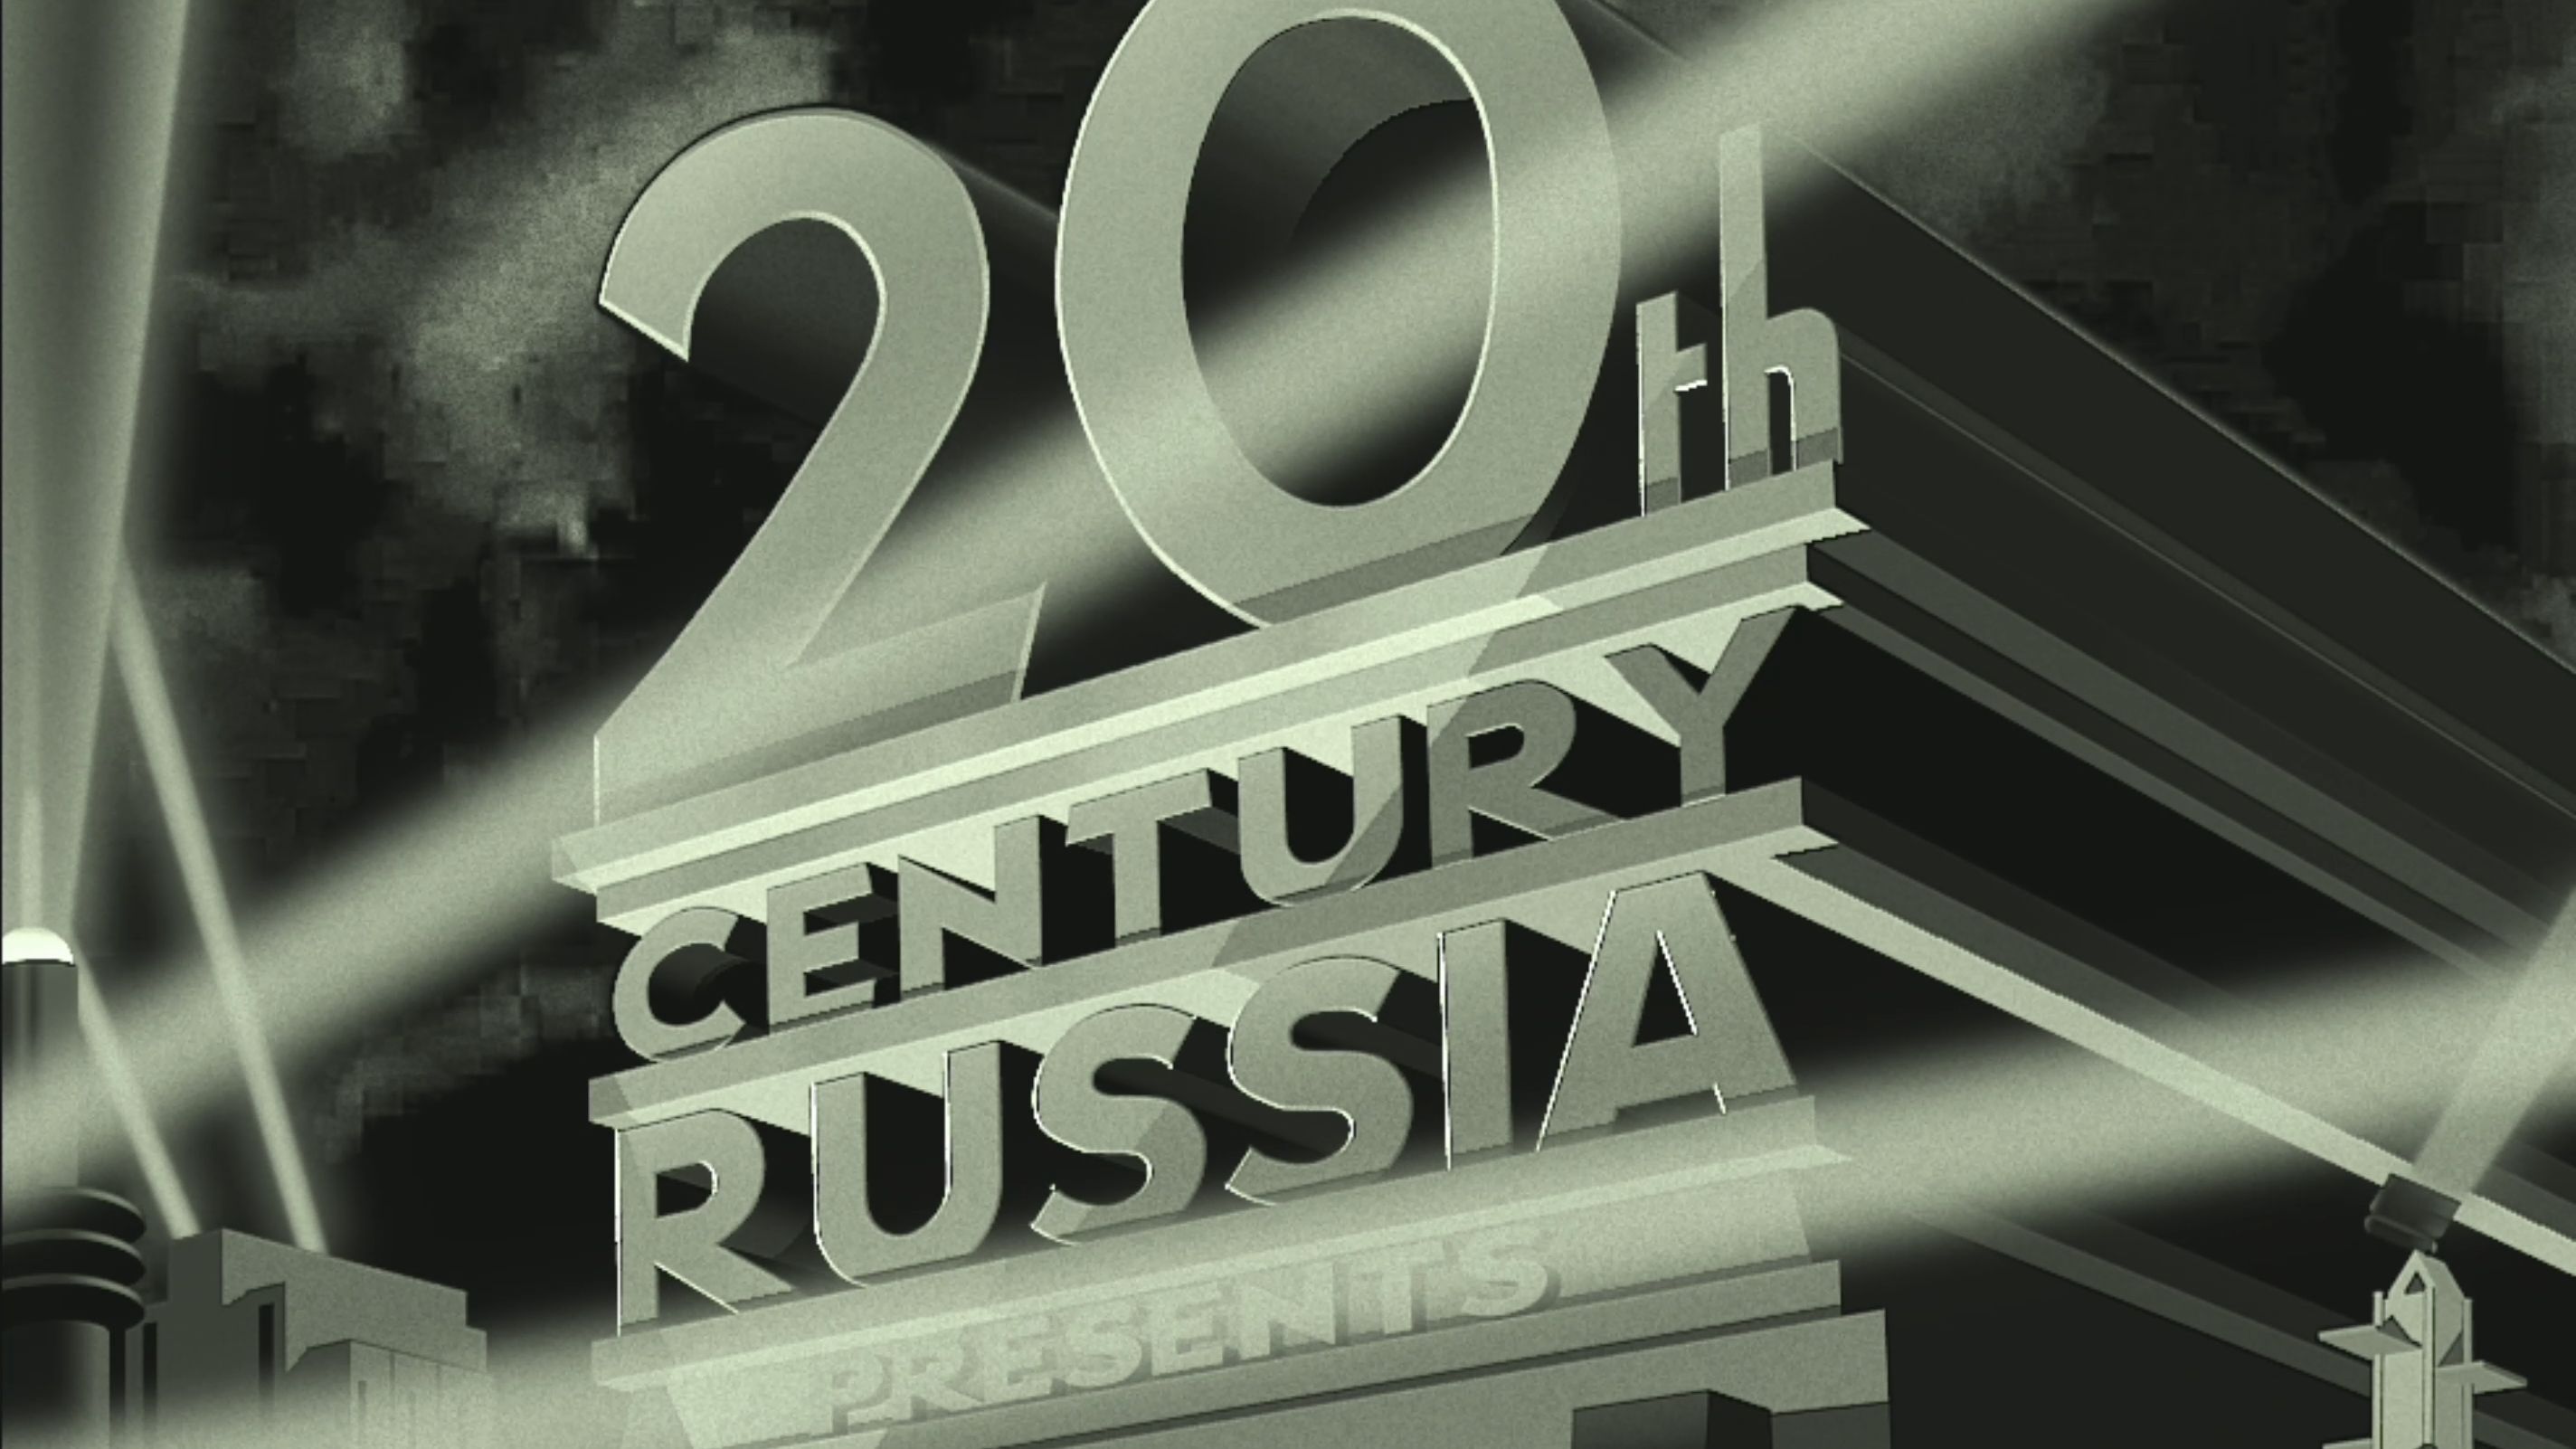 20th Century Fox (1935 Style) - BiliBili